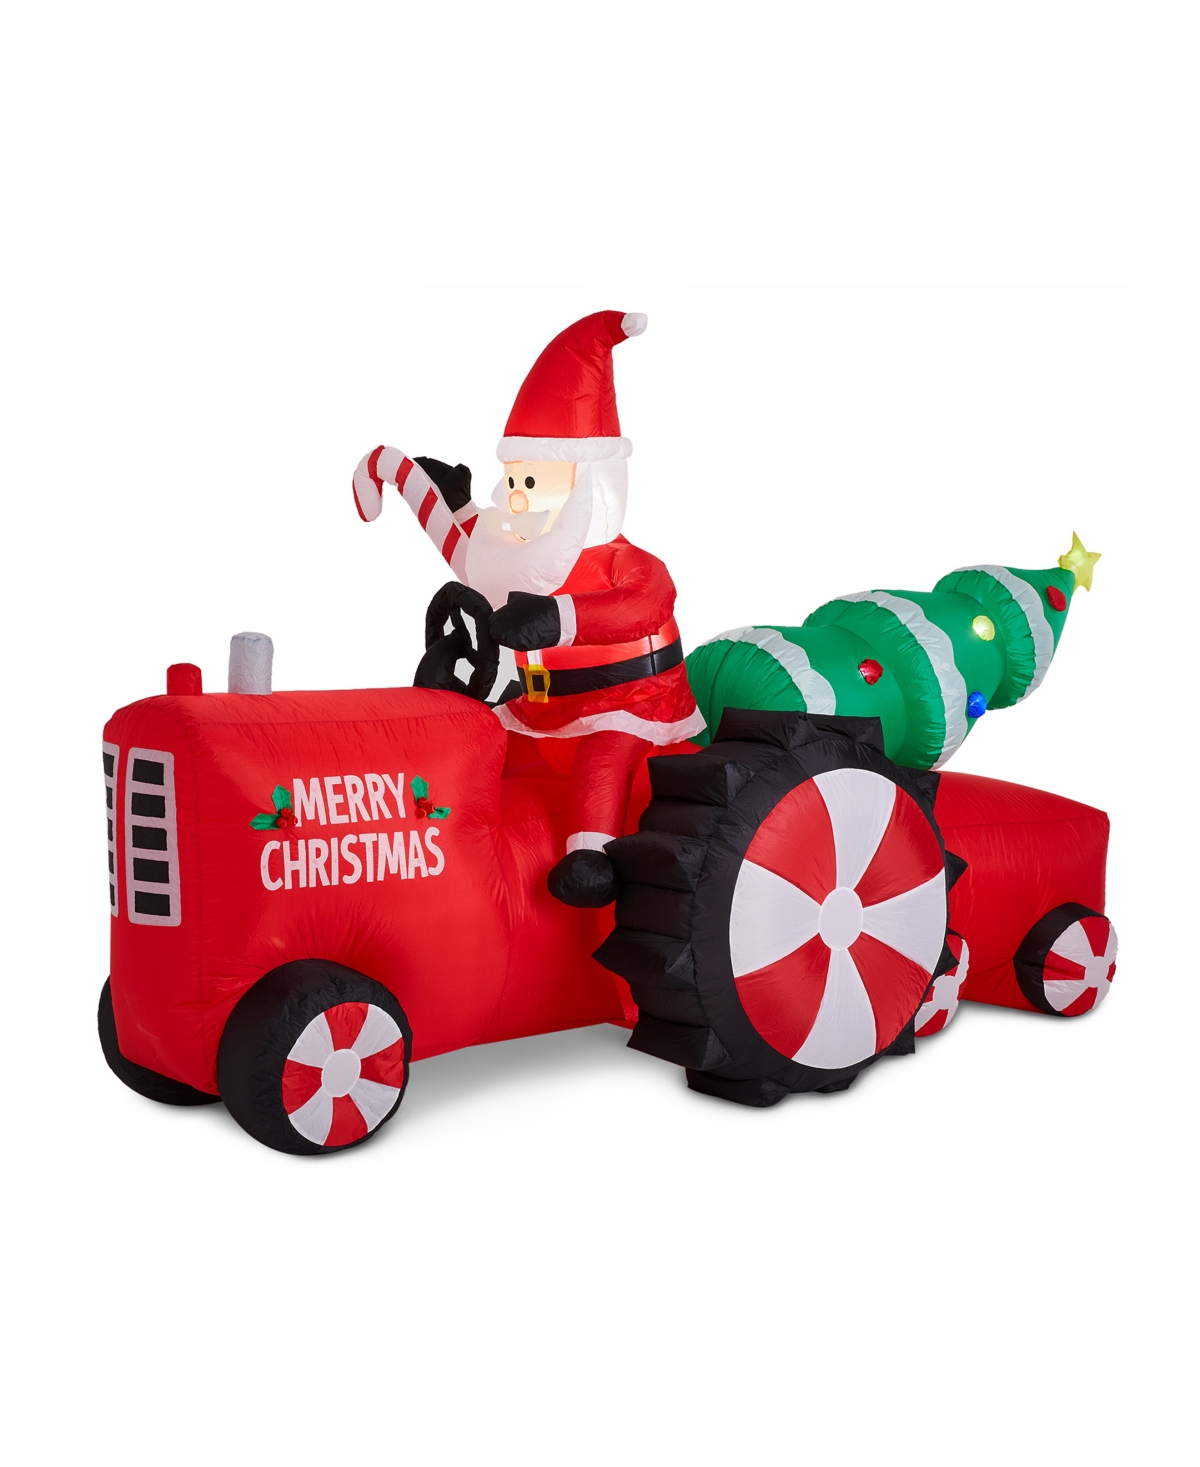 Lighted Inflatable Santa on Tractor Decor - Multi